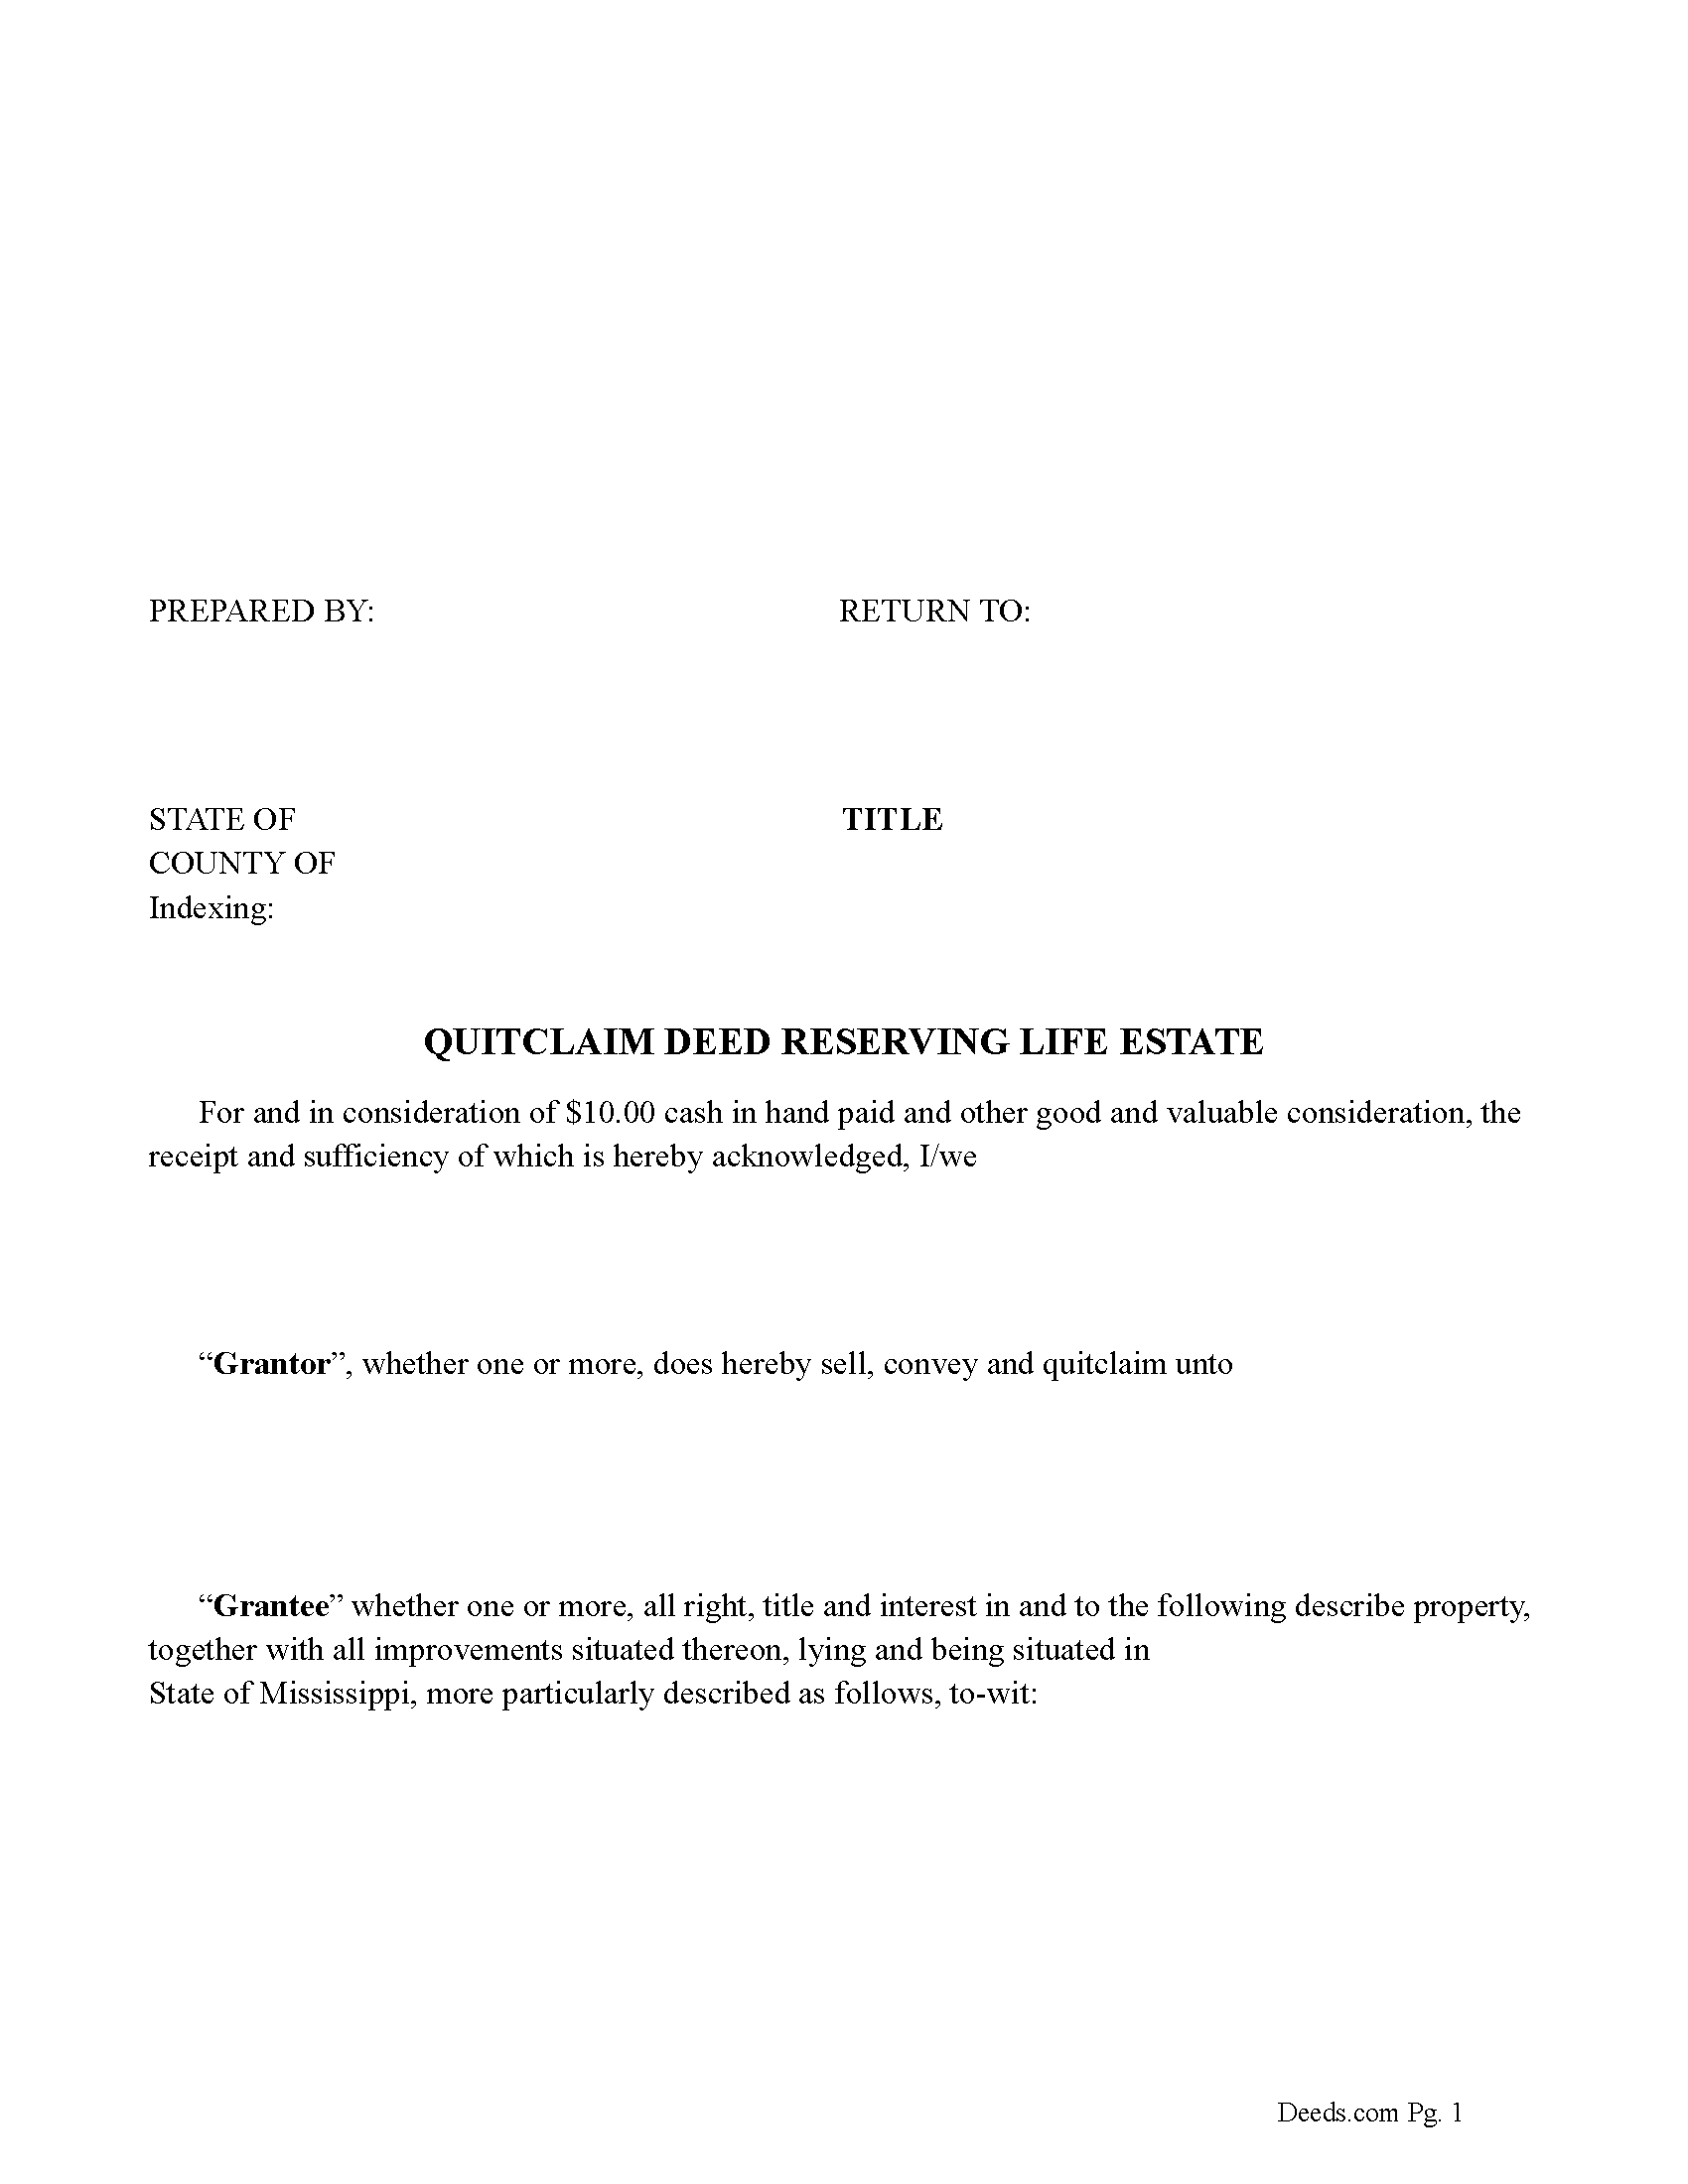 Mississippi Quitclaim Deed Reserving Life Estate Image